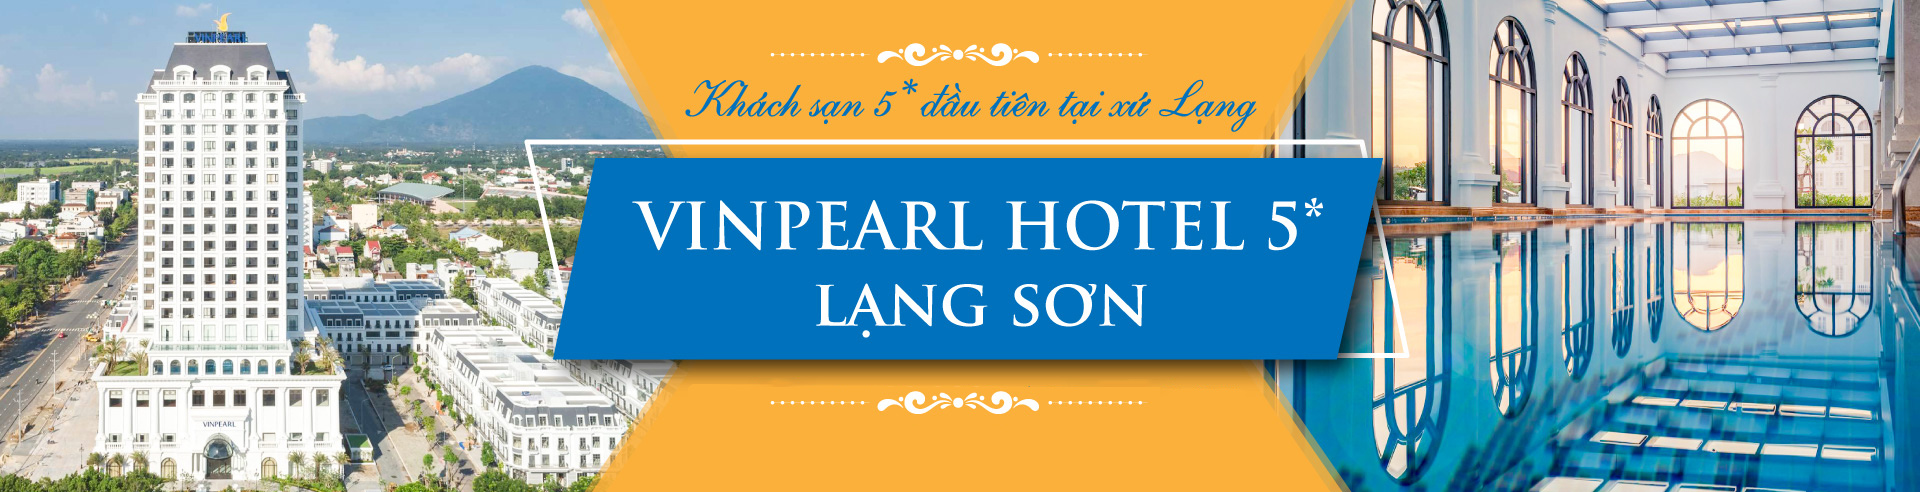 Hotel Destination: Vinpearl Hotel Lạng Sơn